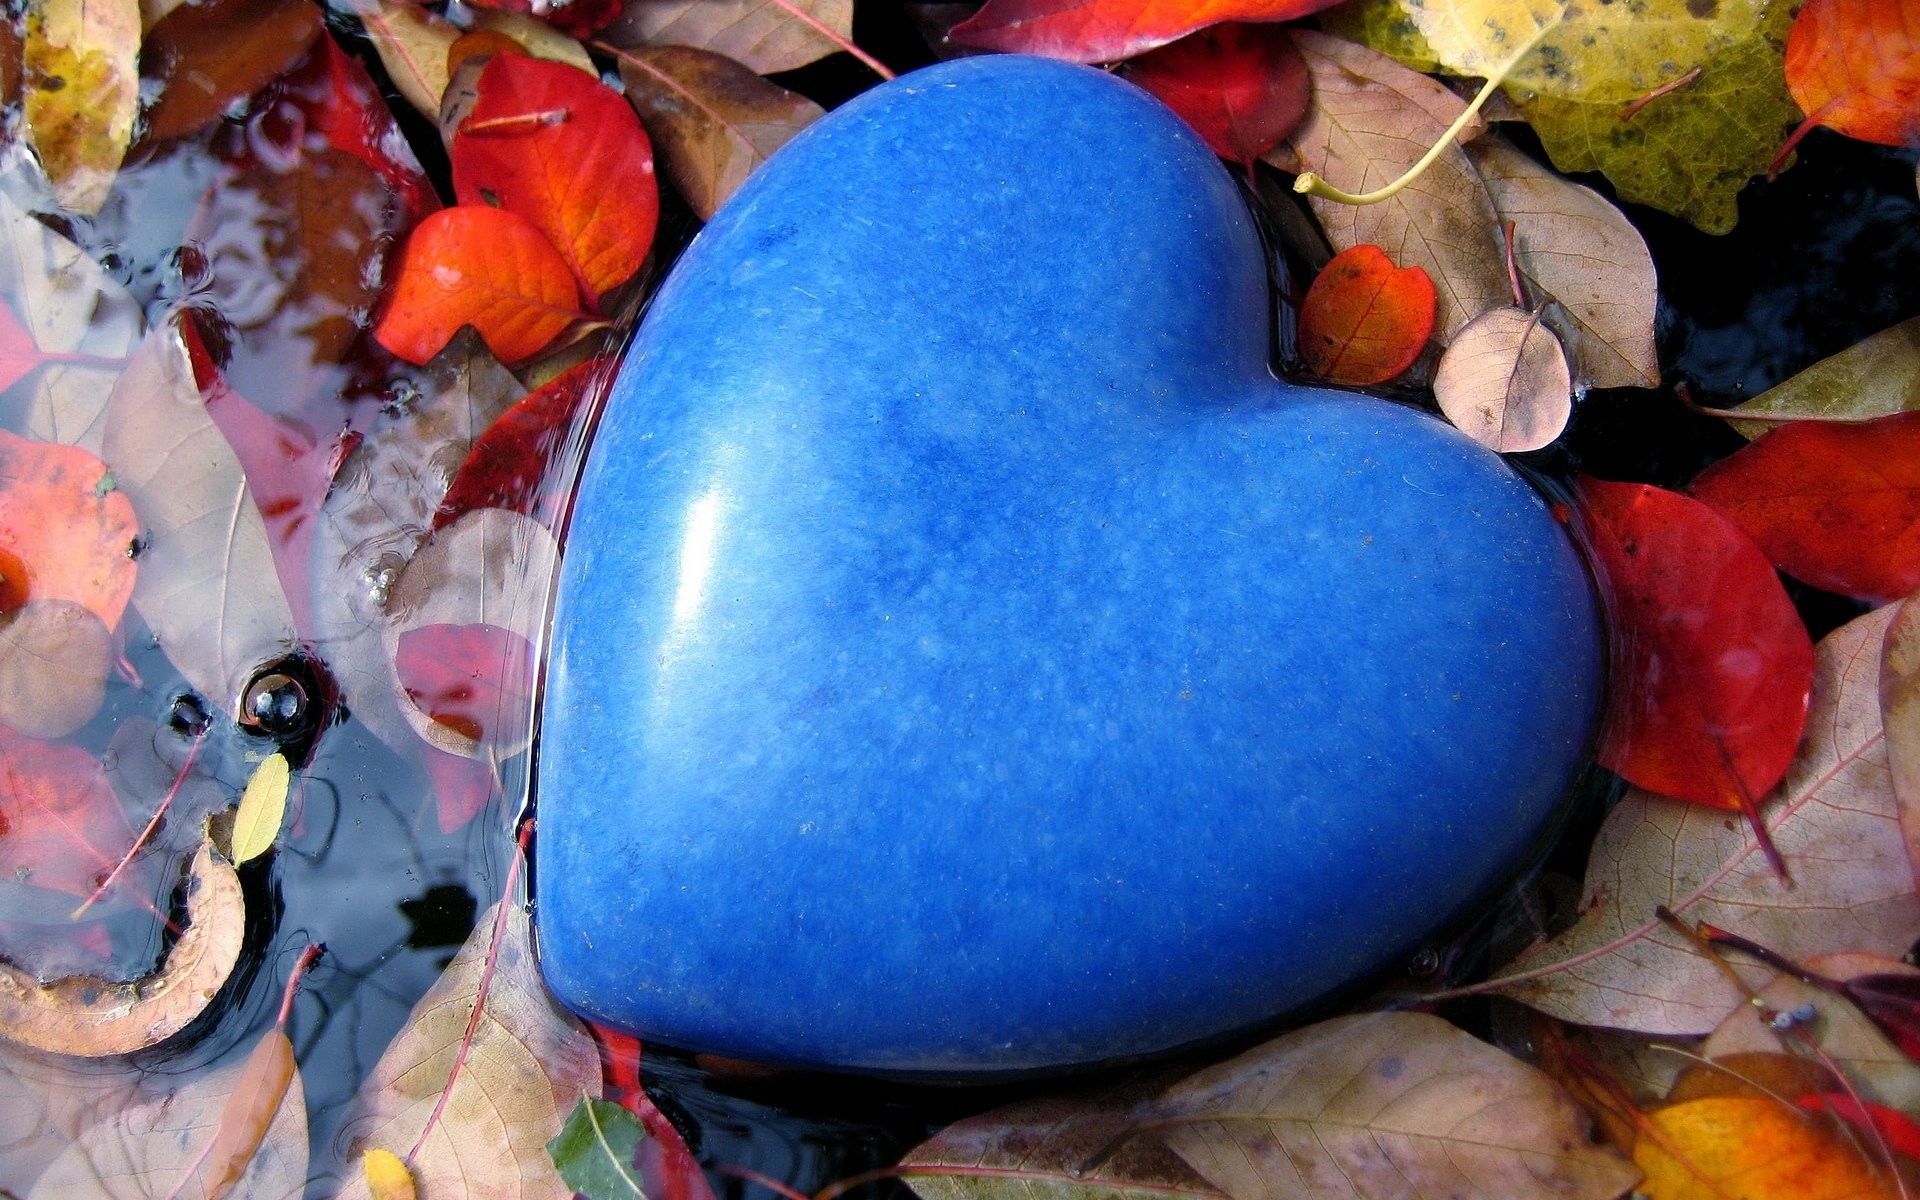 Mood feelings love stone heart form blue blue flowers a pool water leaves